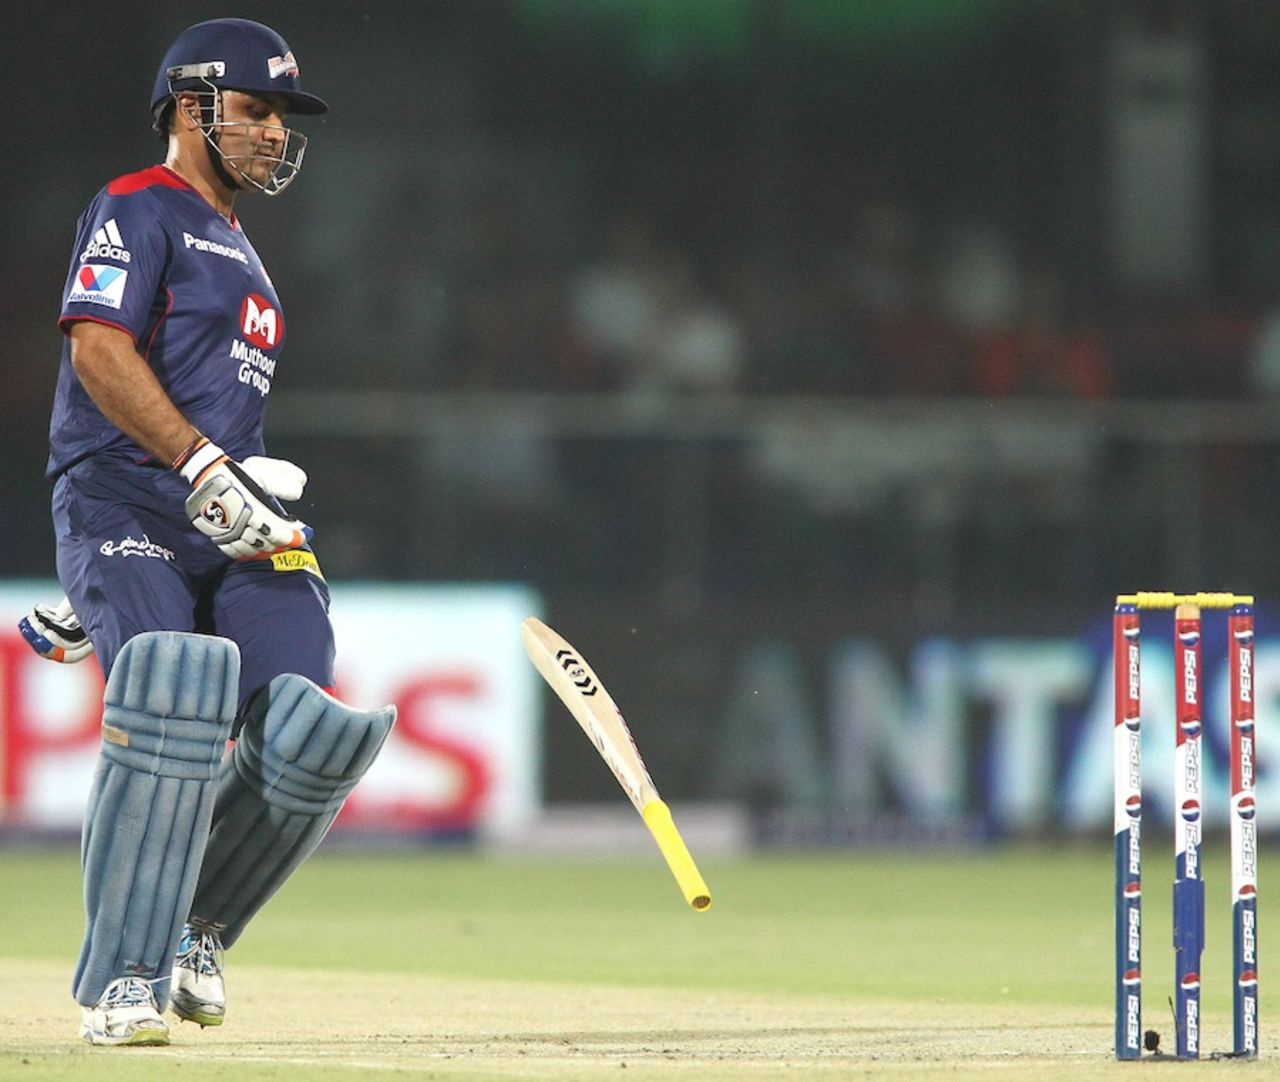 Virender Sehwag drops his bat while taking a run, Delhi Daredevils v Sunrisers Hyderabad, IPL, Delhi, April 12, 2013